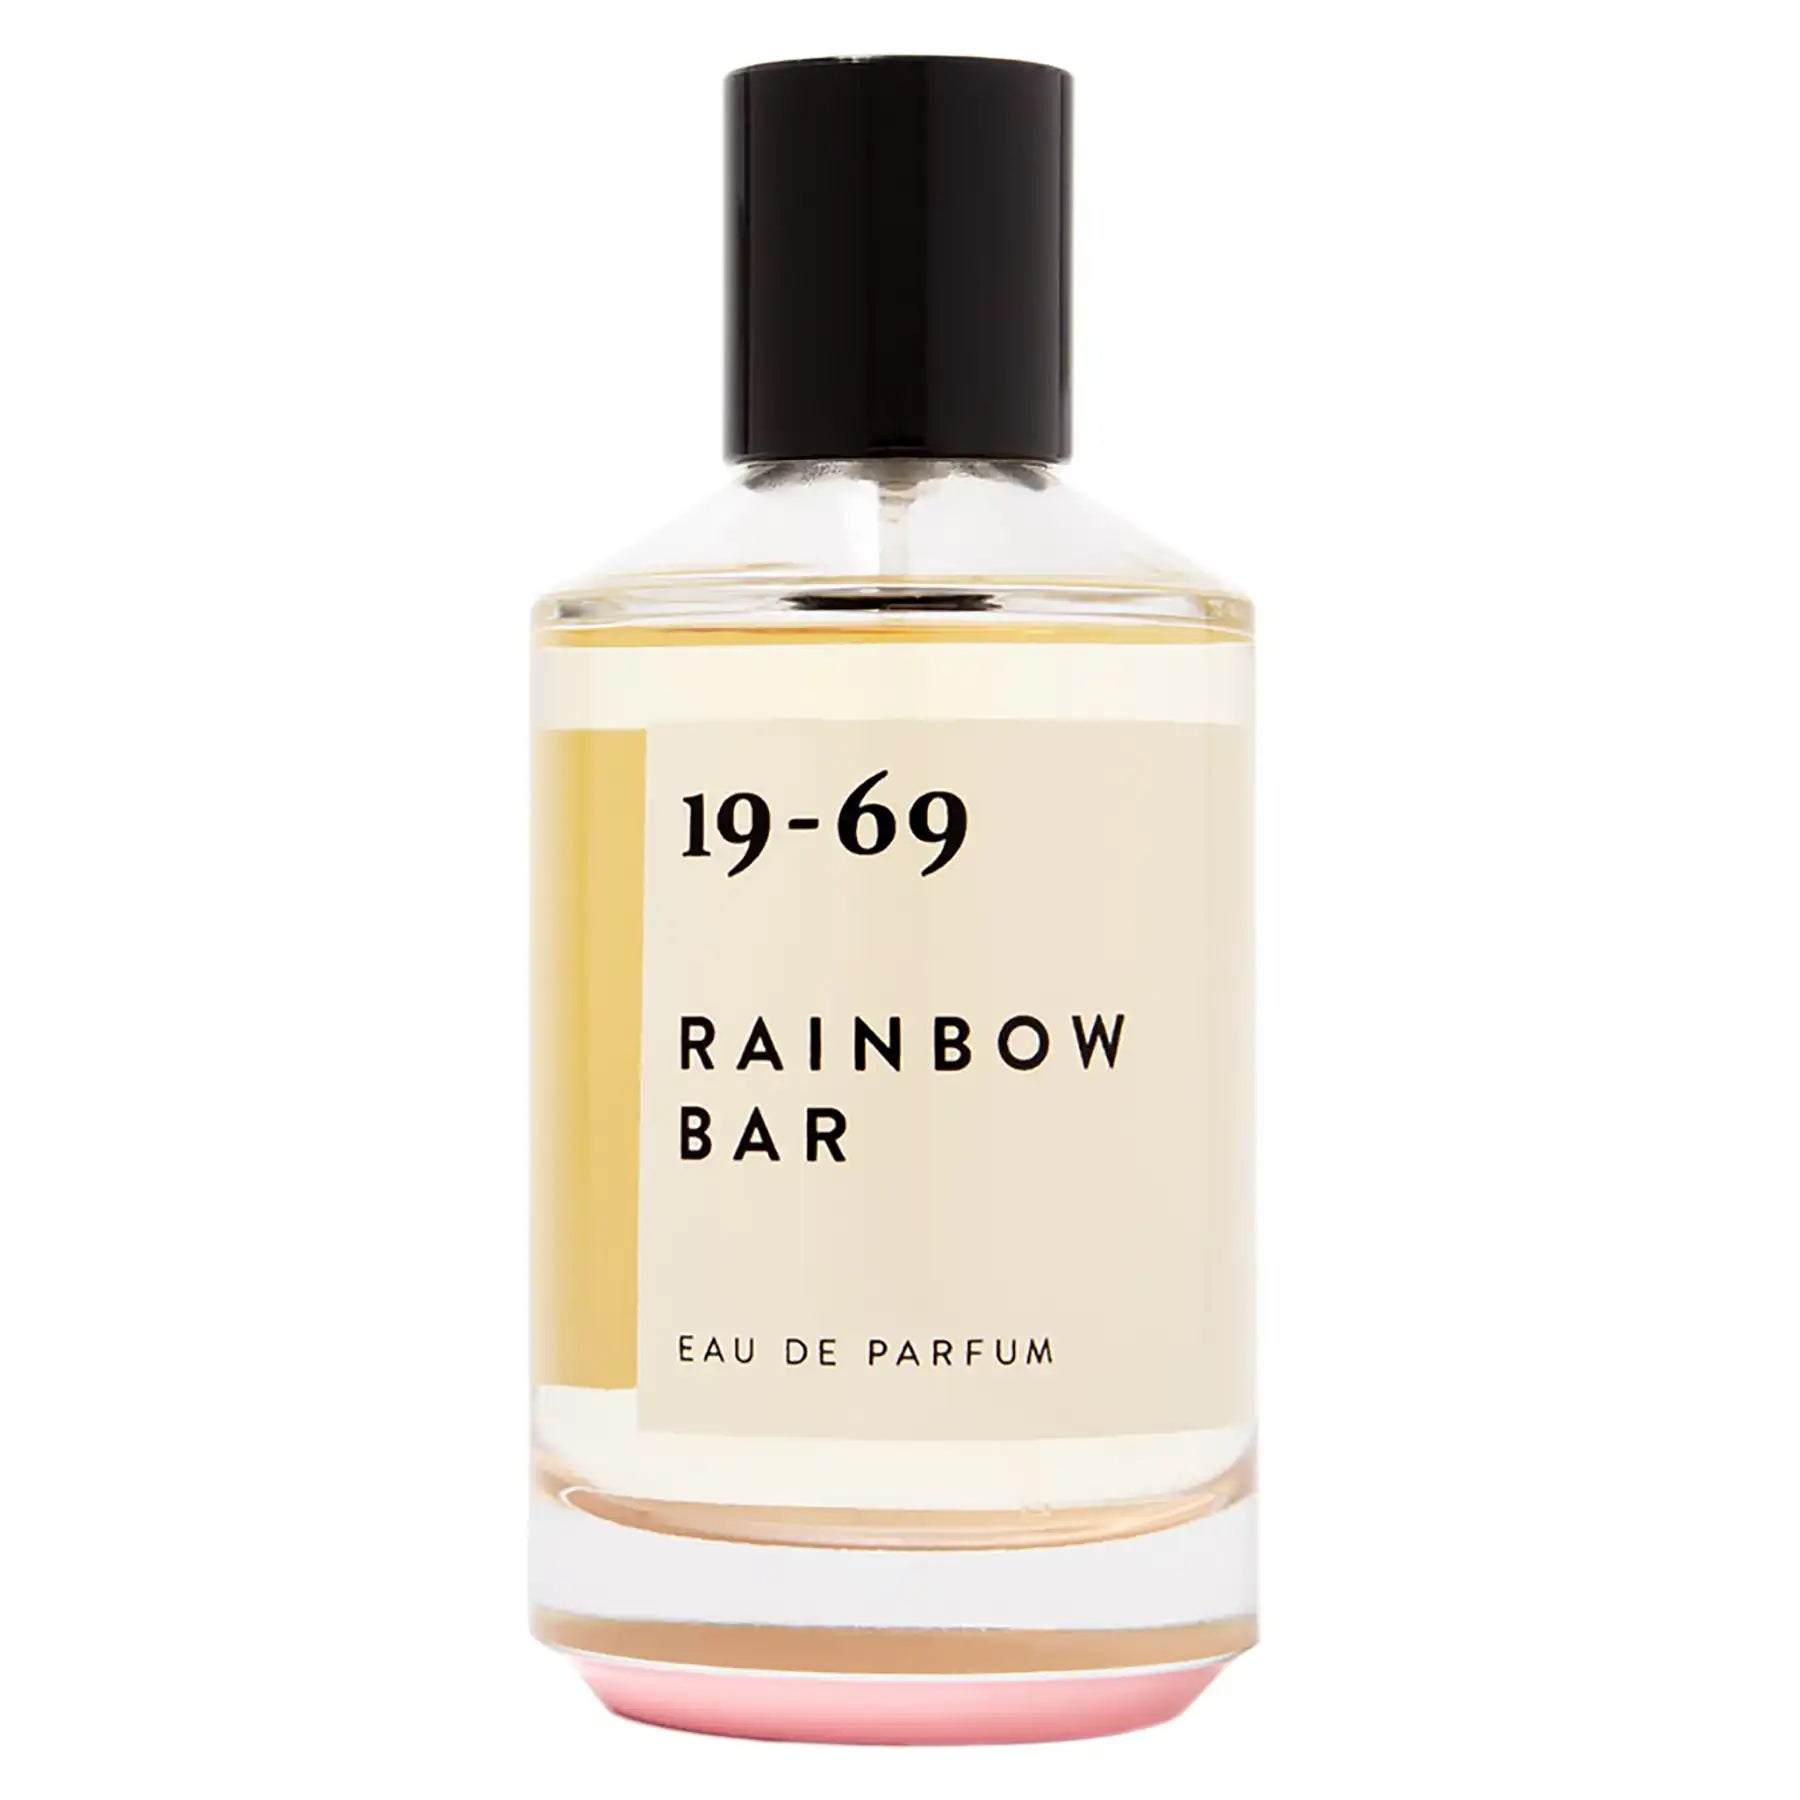 19-69 Rainbow Bar Eau de Parfum